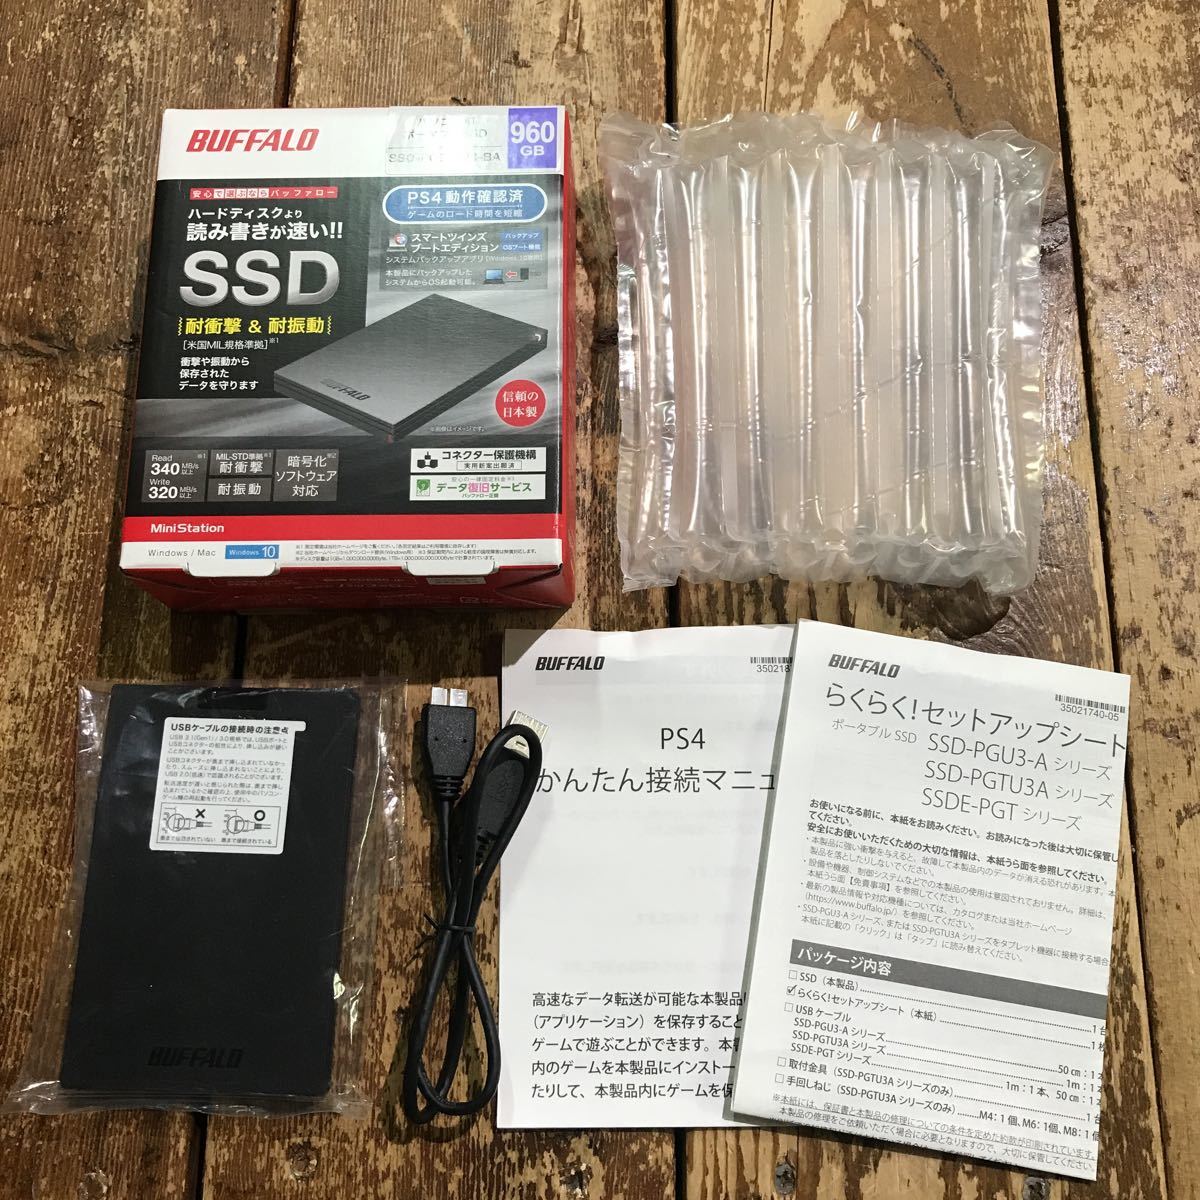 101 Puffalo Portable SSD SSD-PG960U3-BA 960GB Красота [202221118]